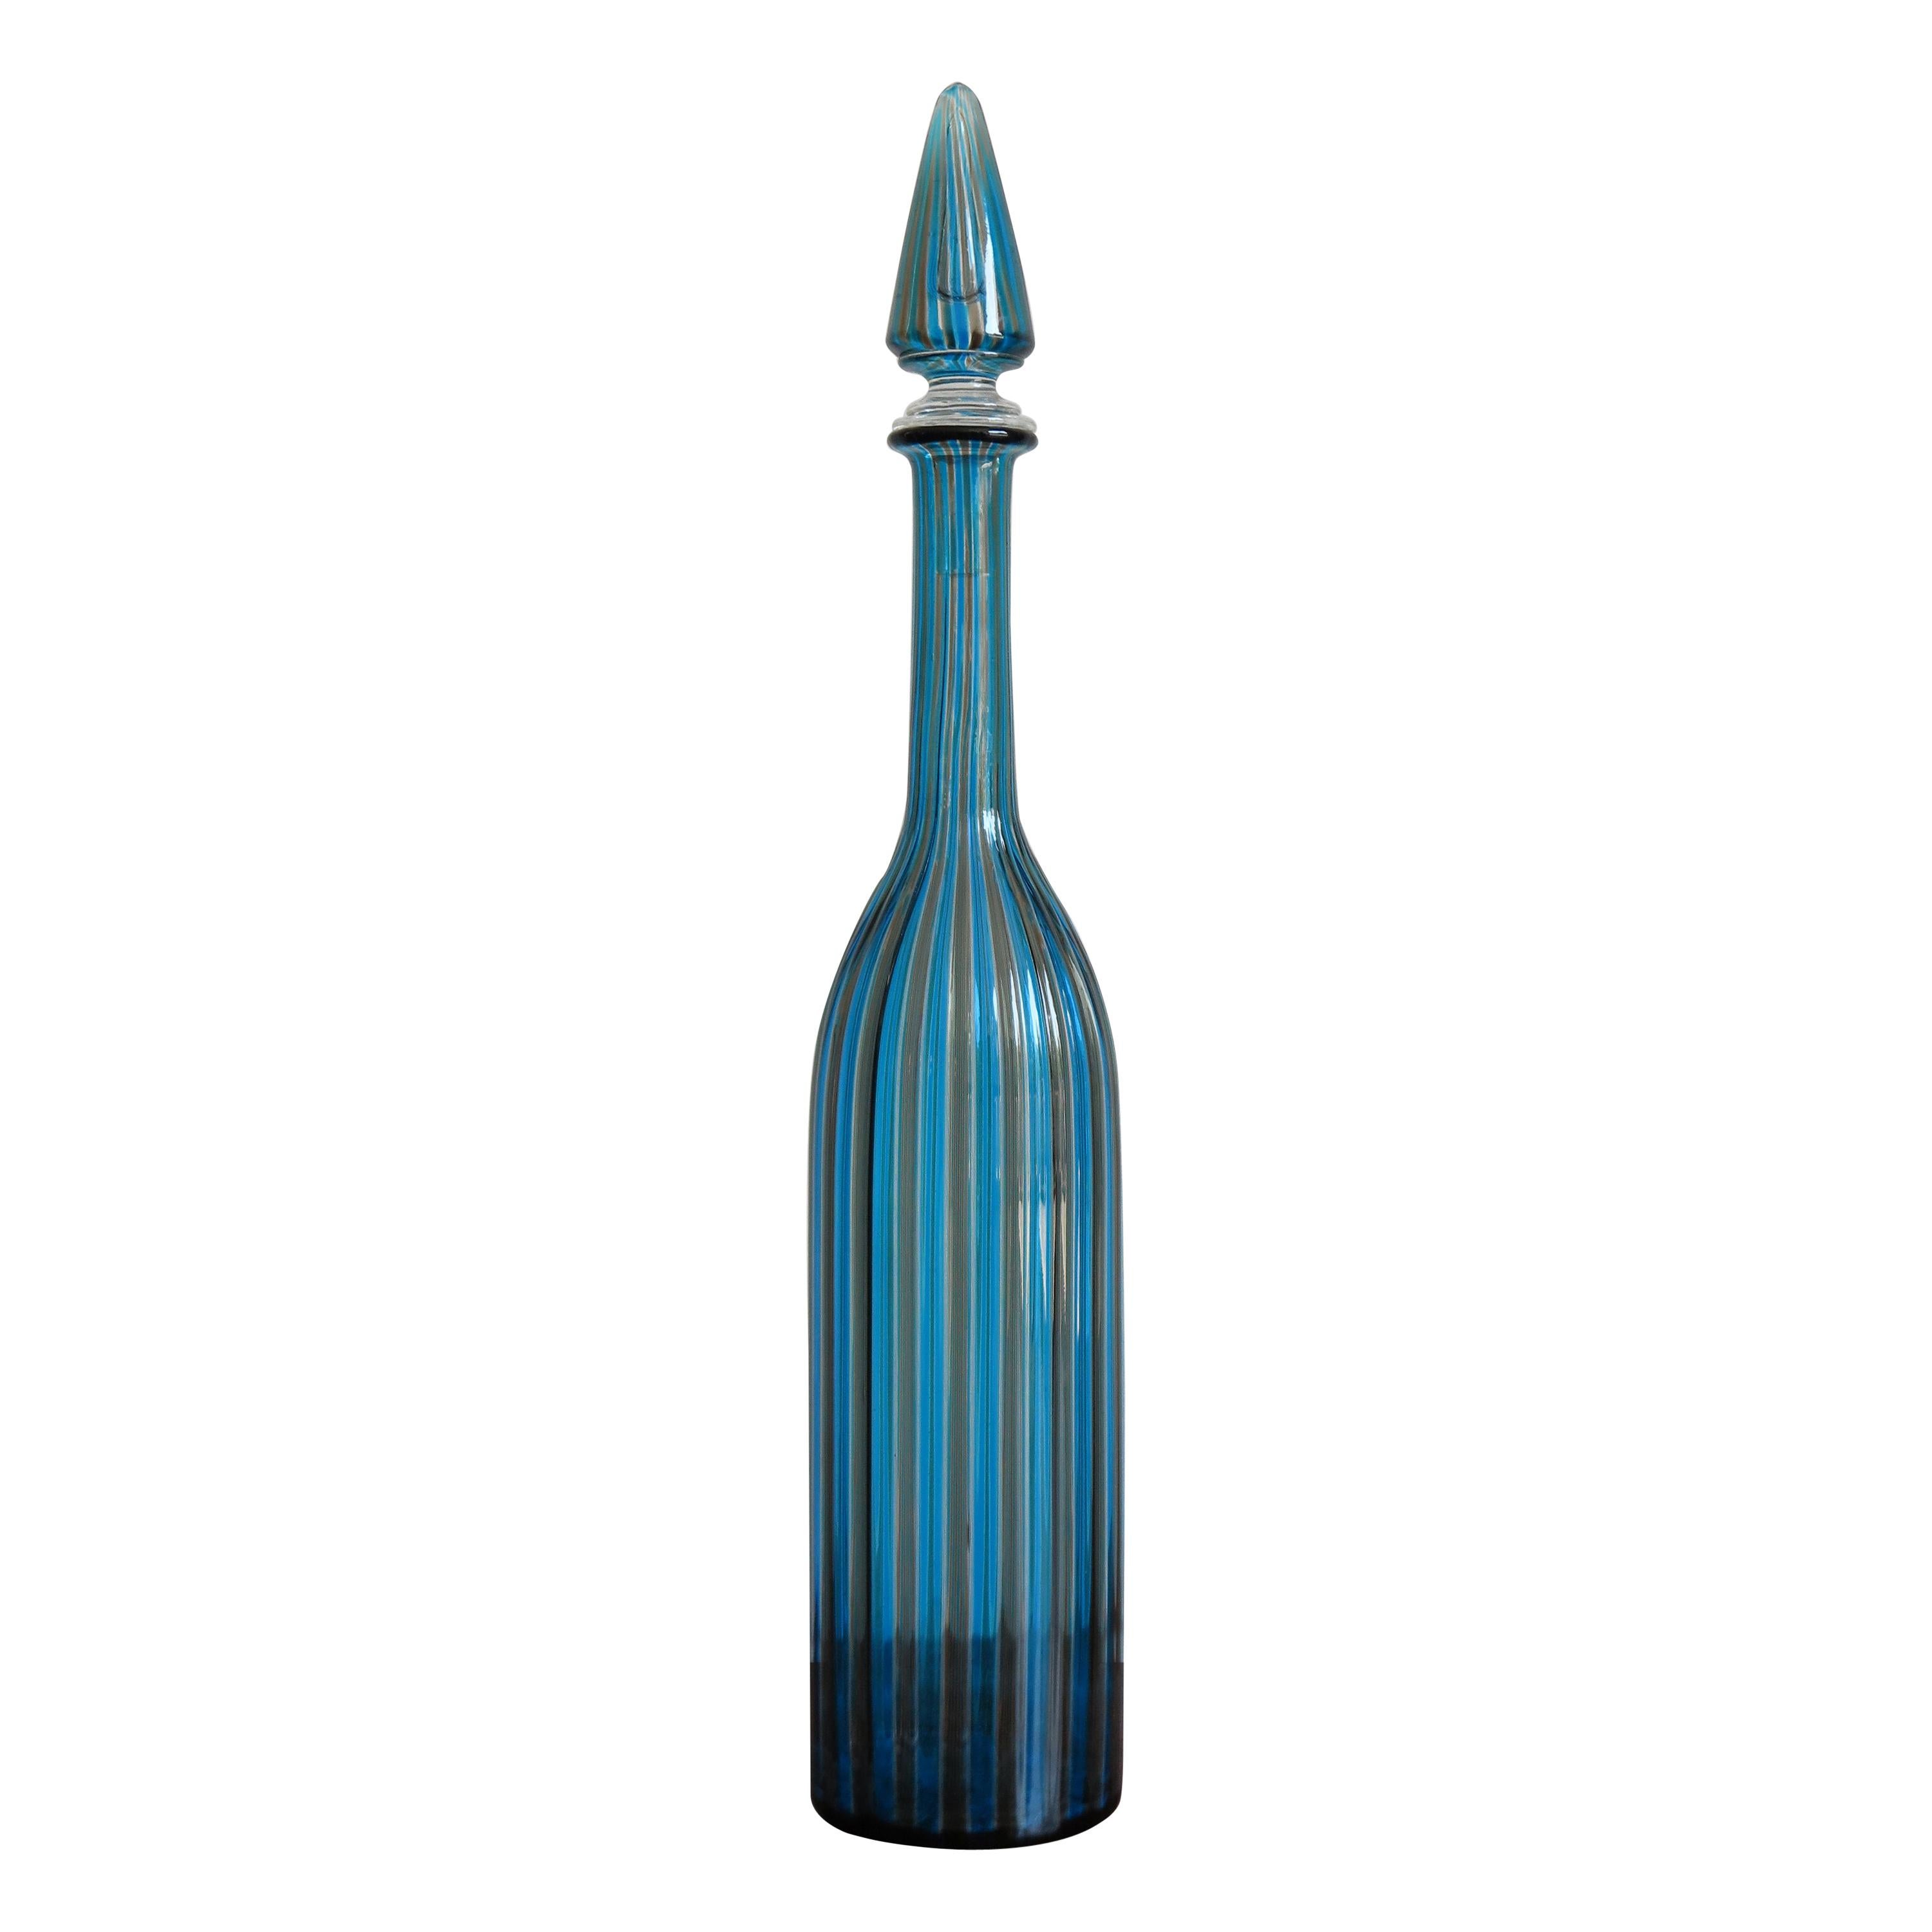 Gio Ponti for Venini Italy Light Blue and Gray Glass Bottle Series “Morandiane”